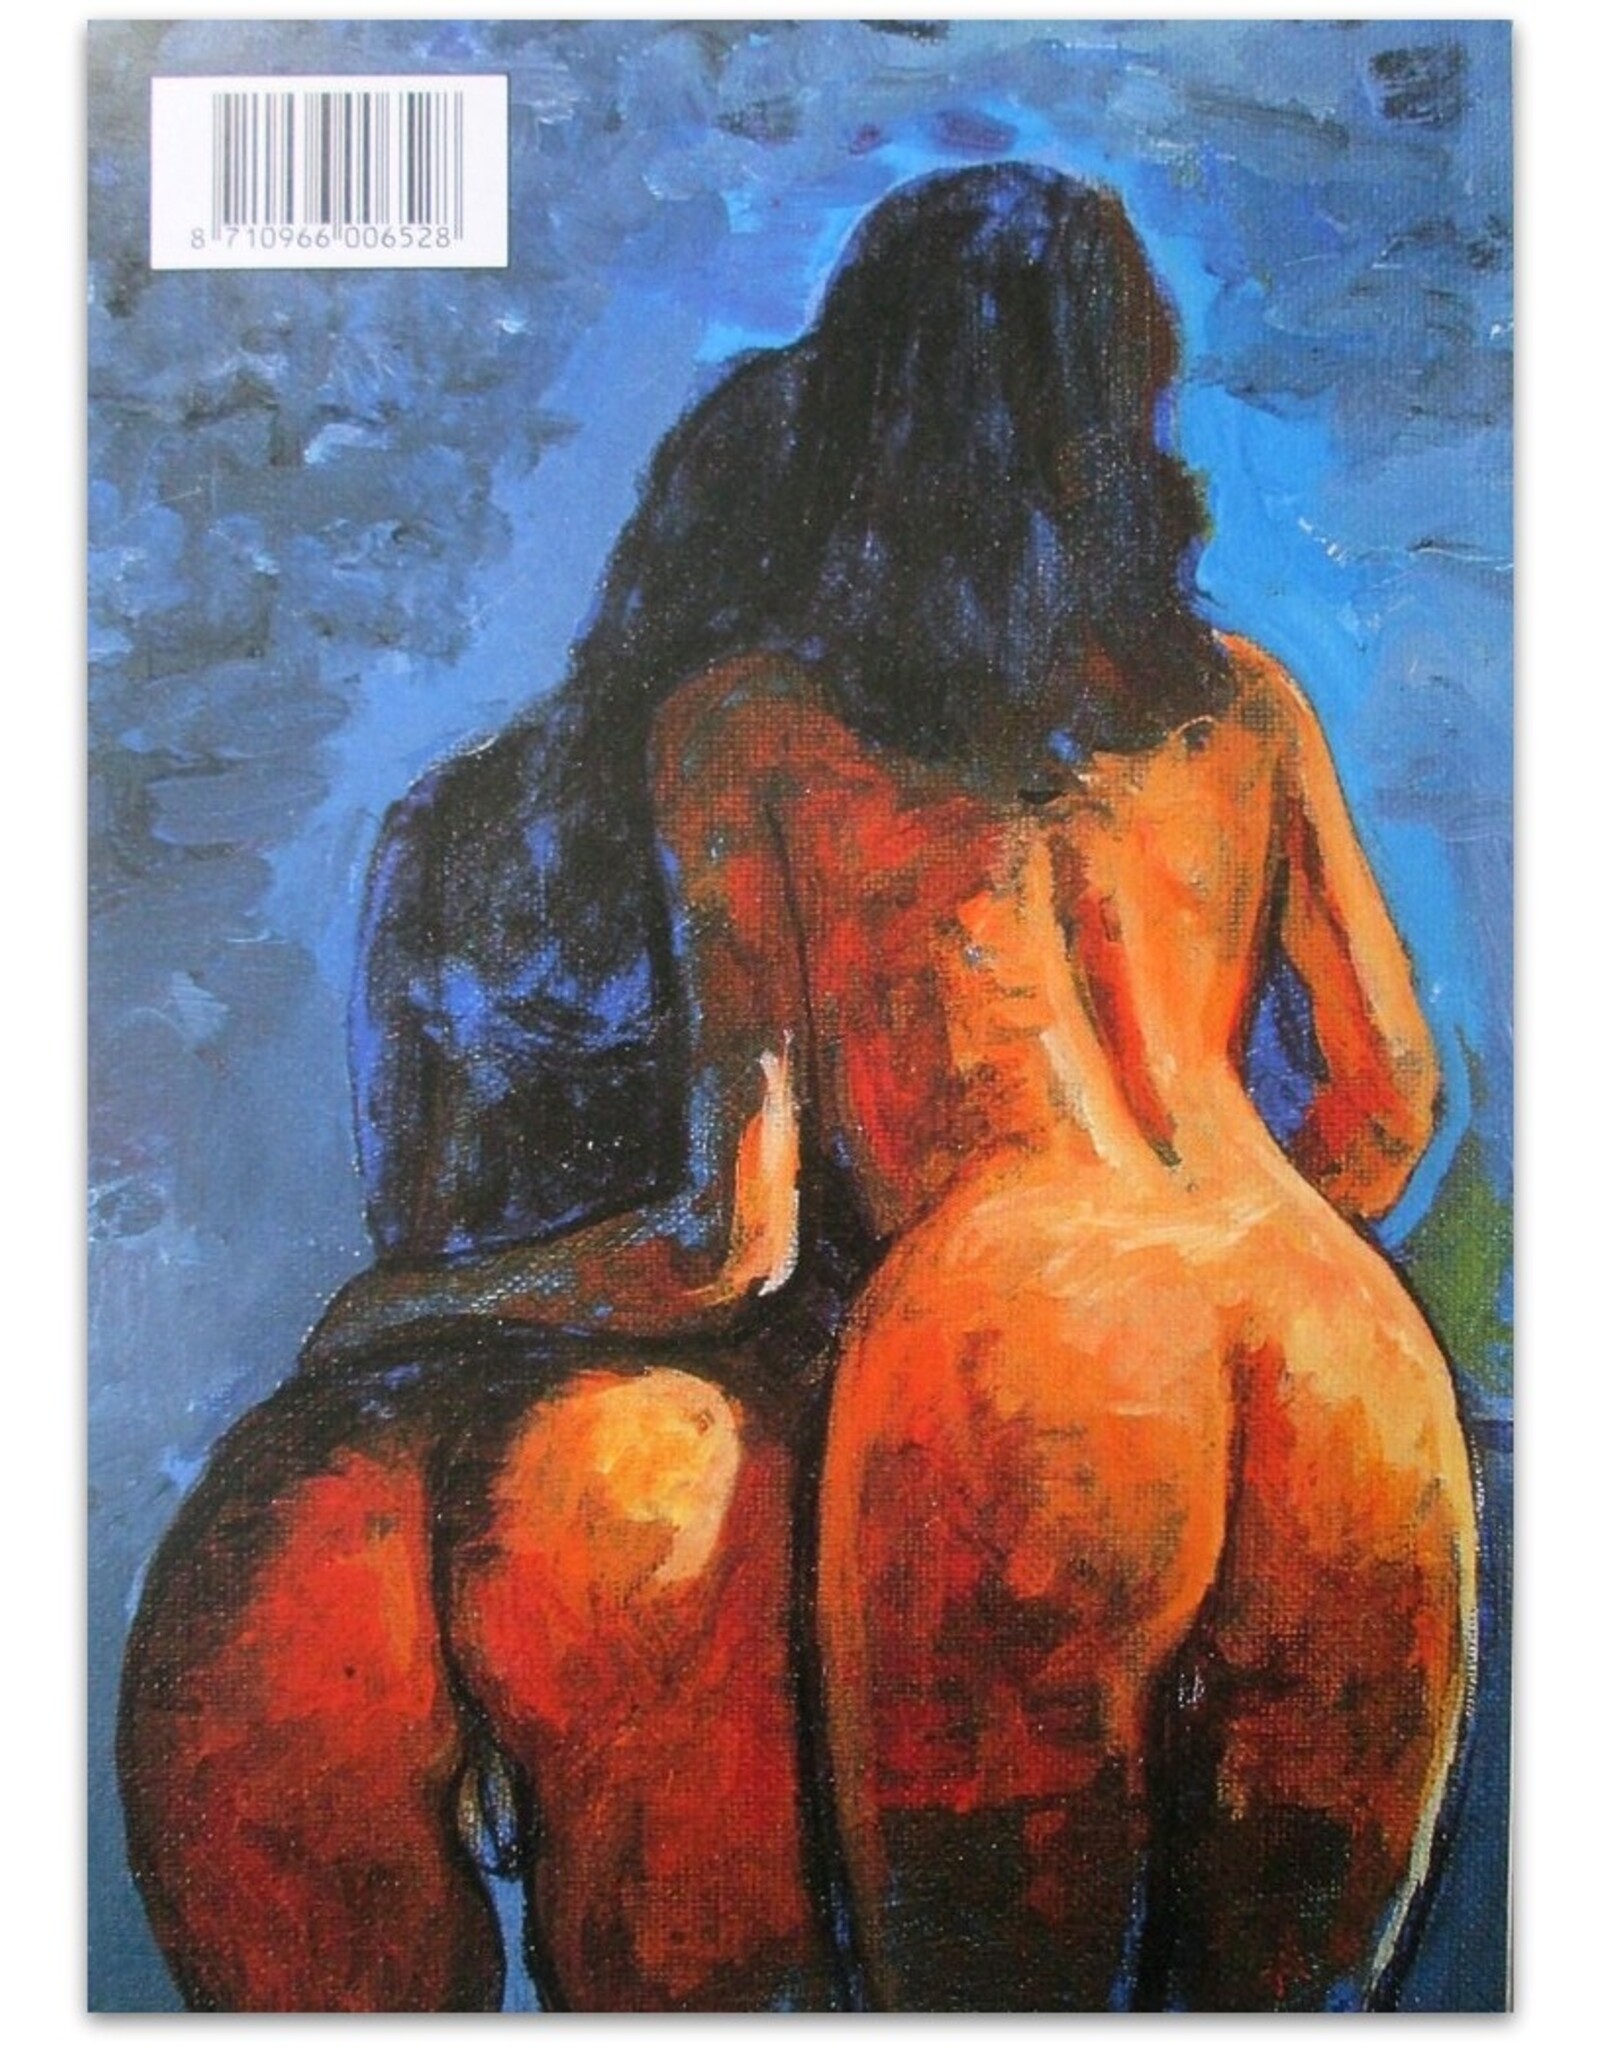 Jurriaan van Hall [ed.] - Kendie? t Eerste 't beste erotische kunstmagazine. Nr. 001